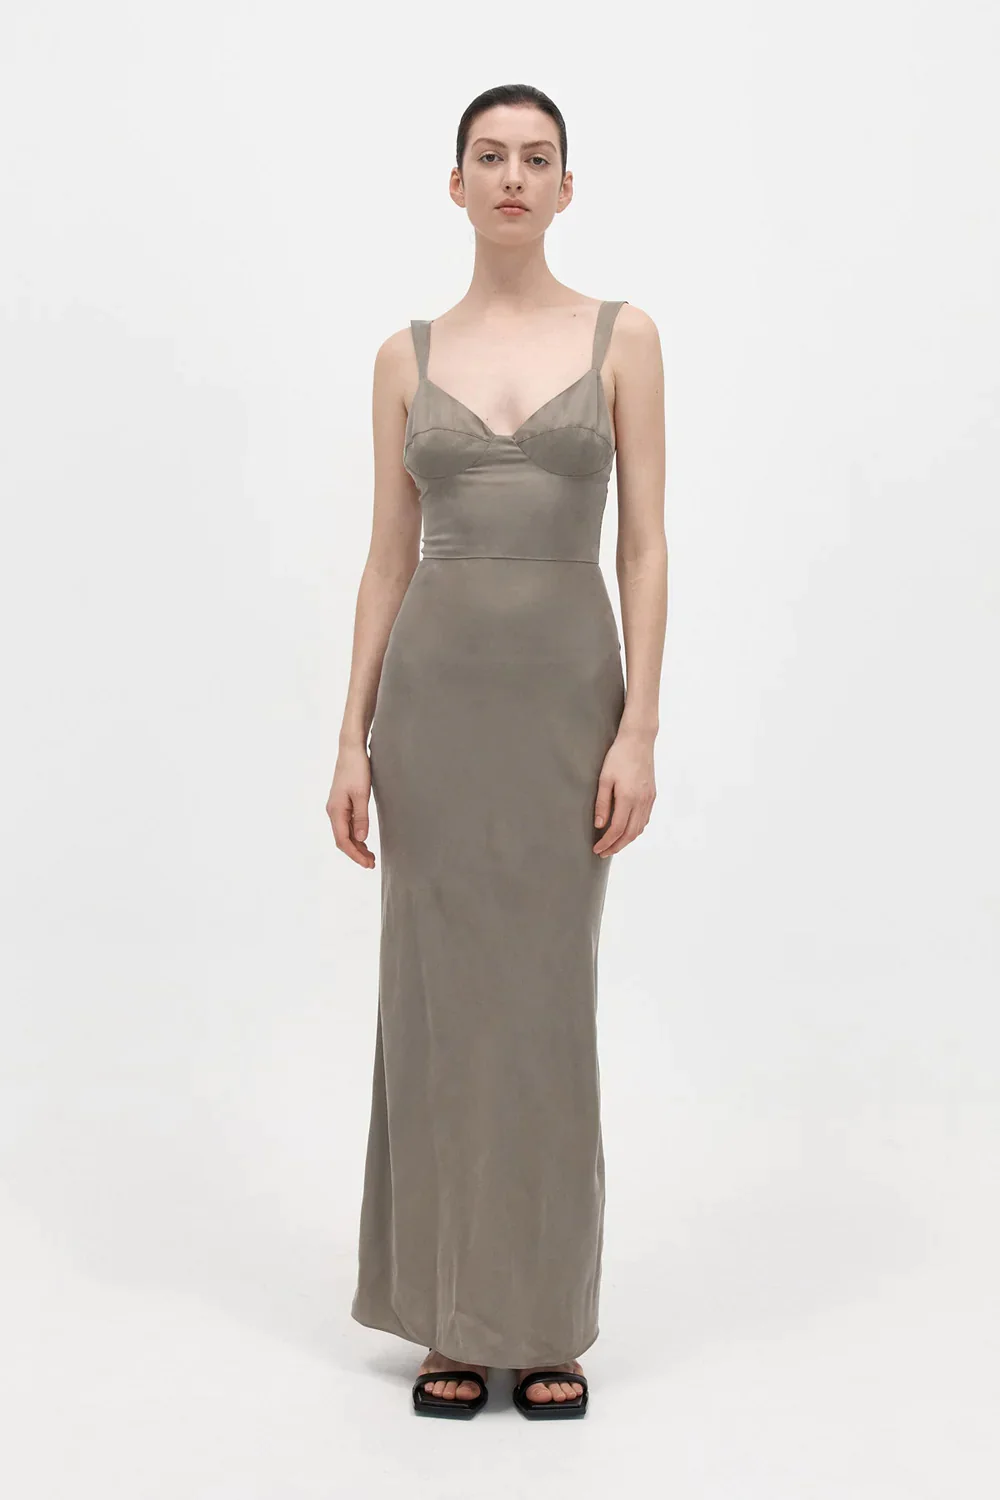 Product Image for Peignoir Slip Dress, Castor Grey